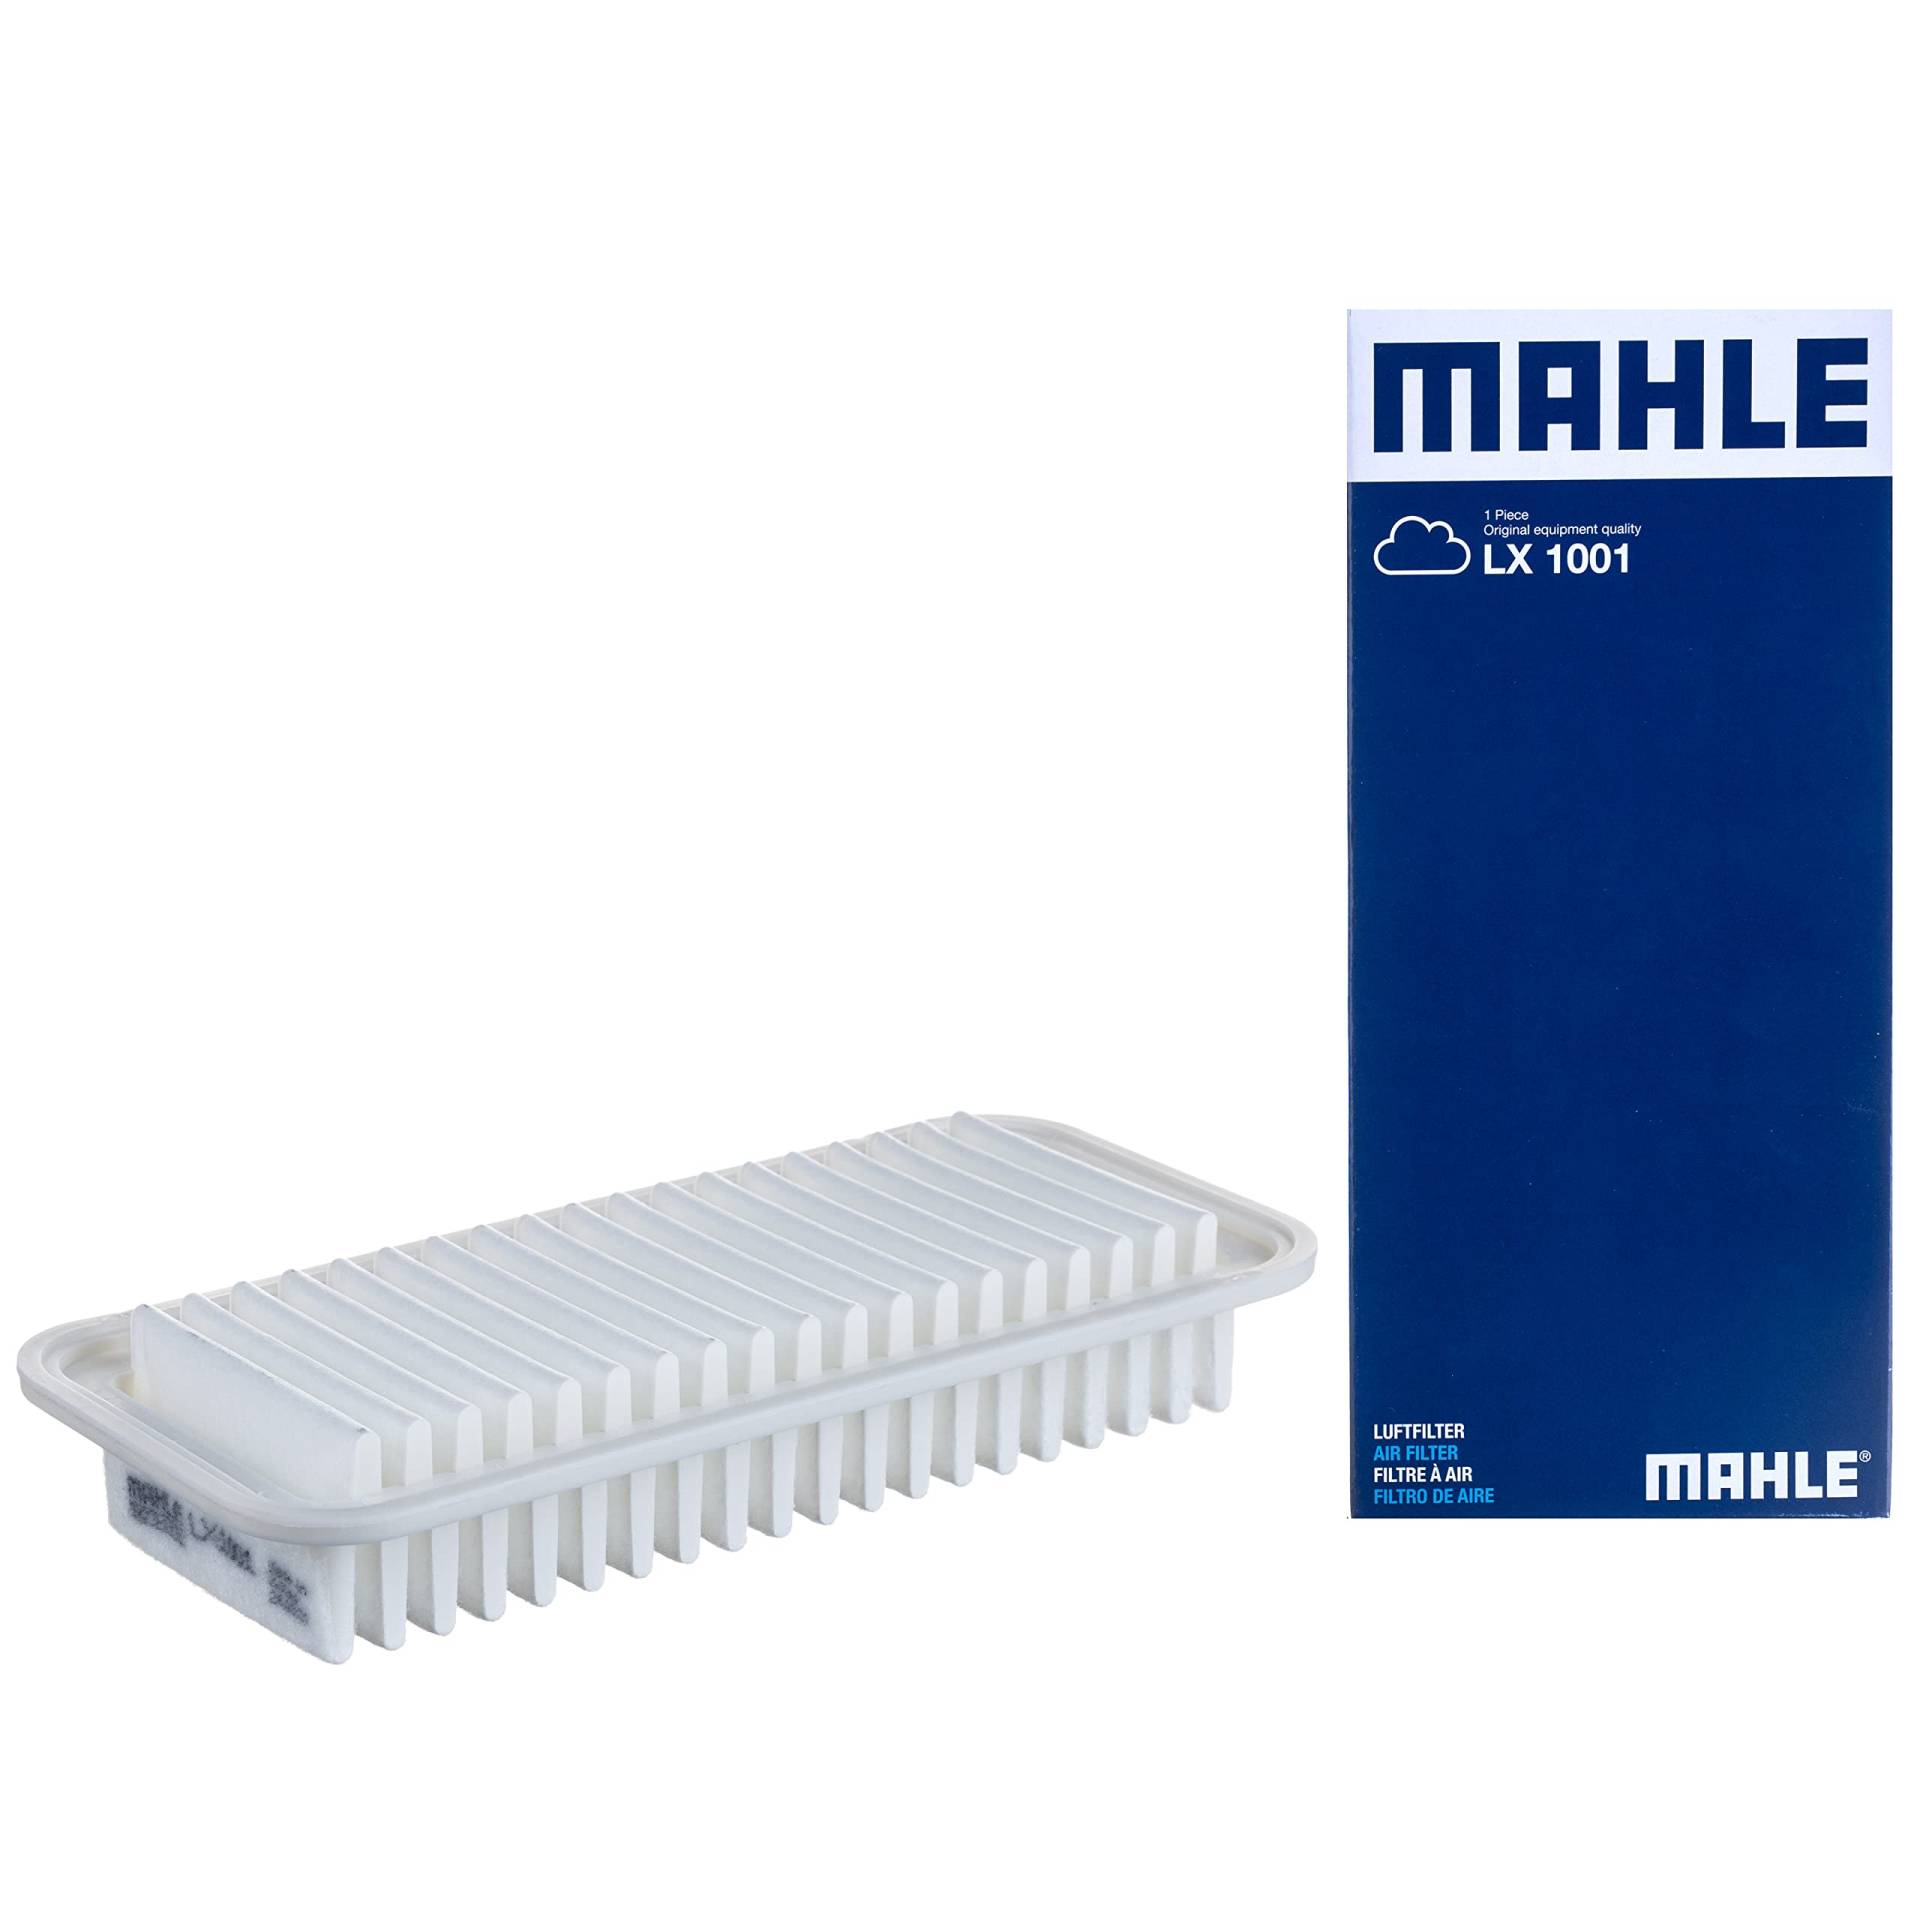 Mahle Knecht LX 1001 Luftfilter von MAHLE